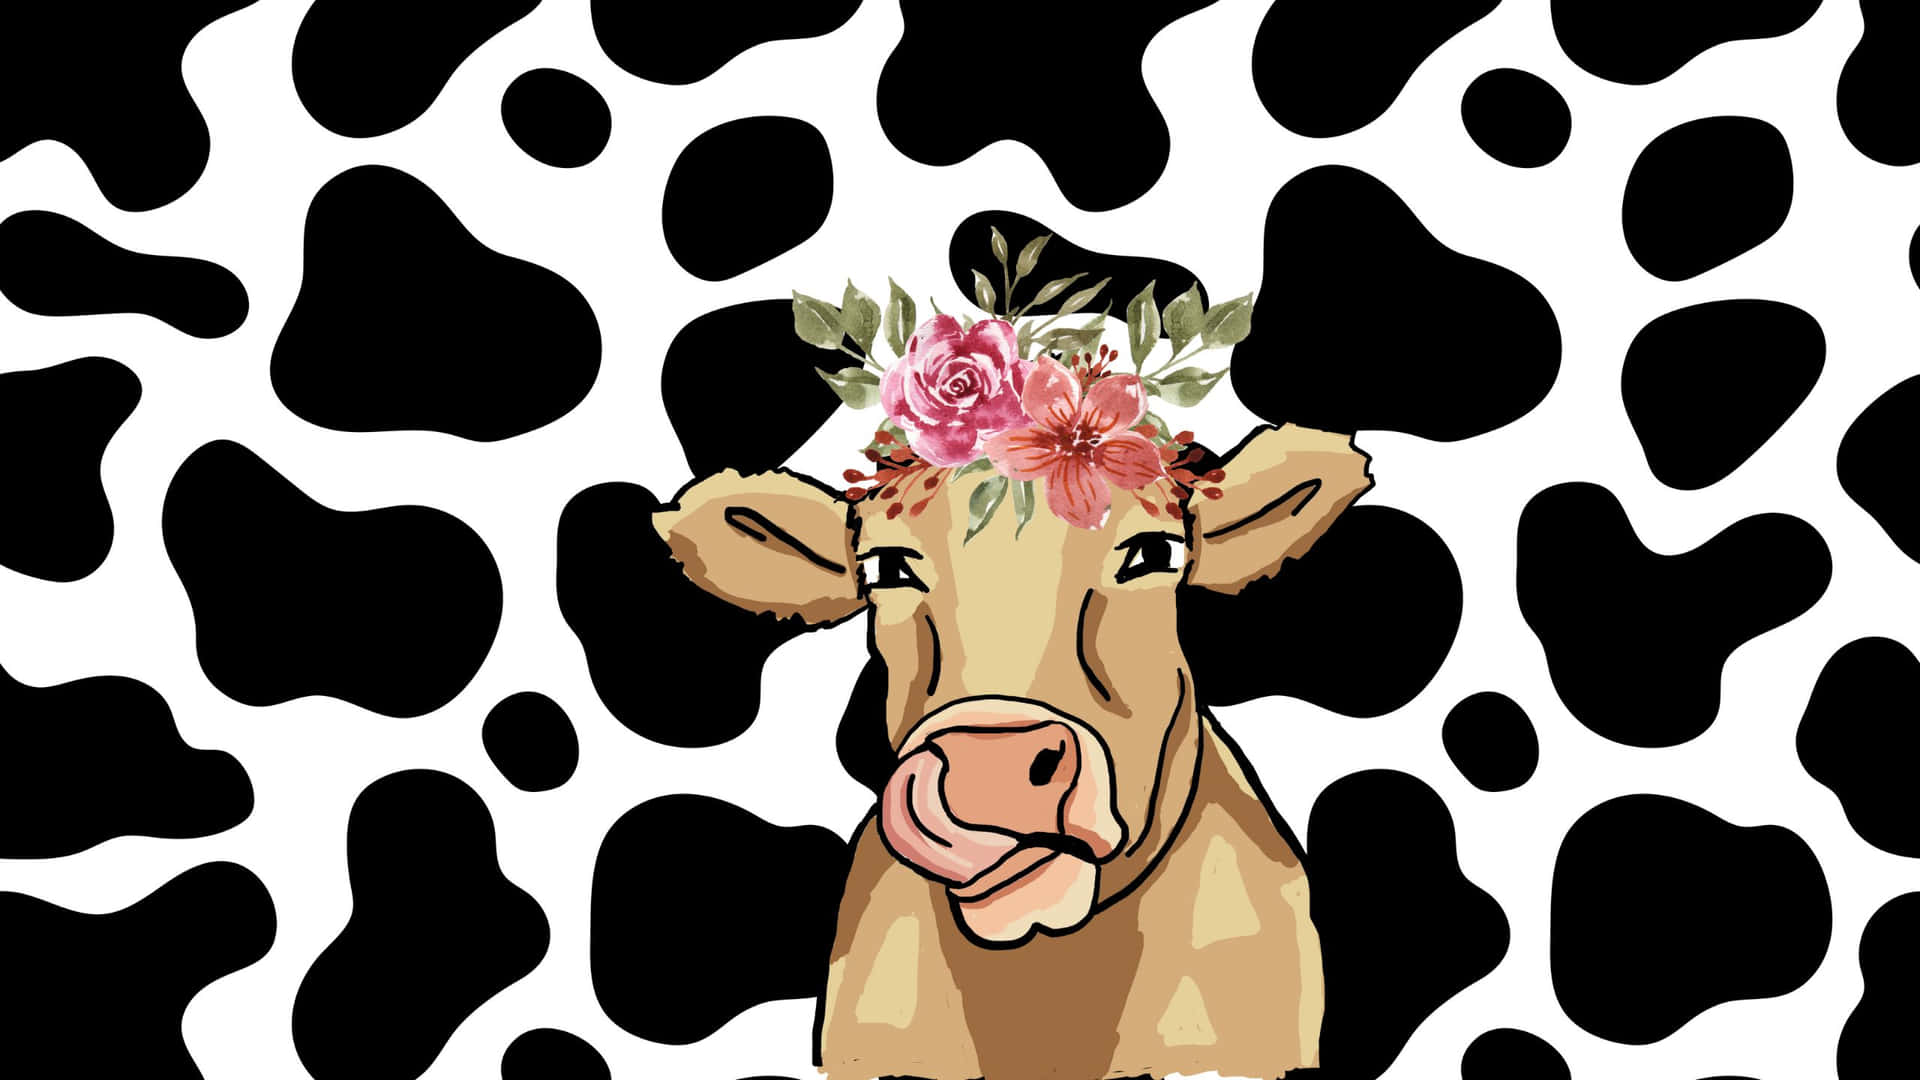 Free Cow Print Preppy Wallpaper  Download in JPG  Templatenet